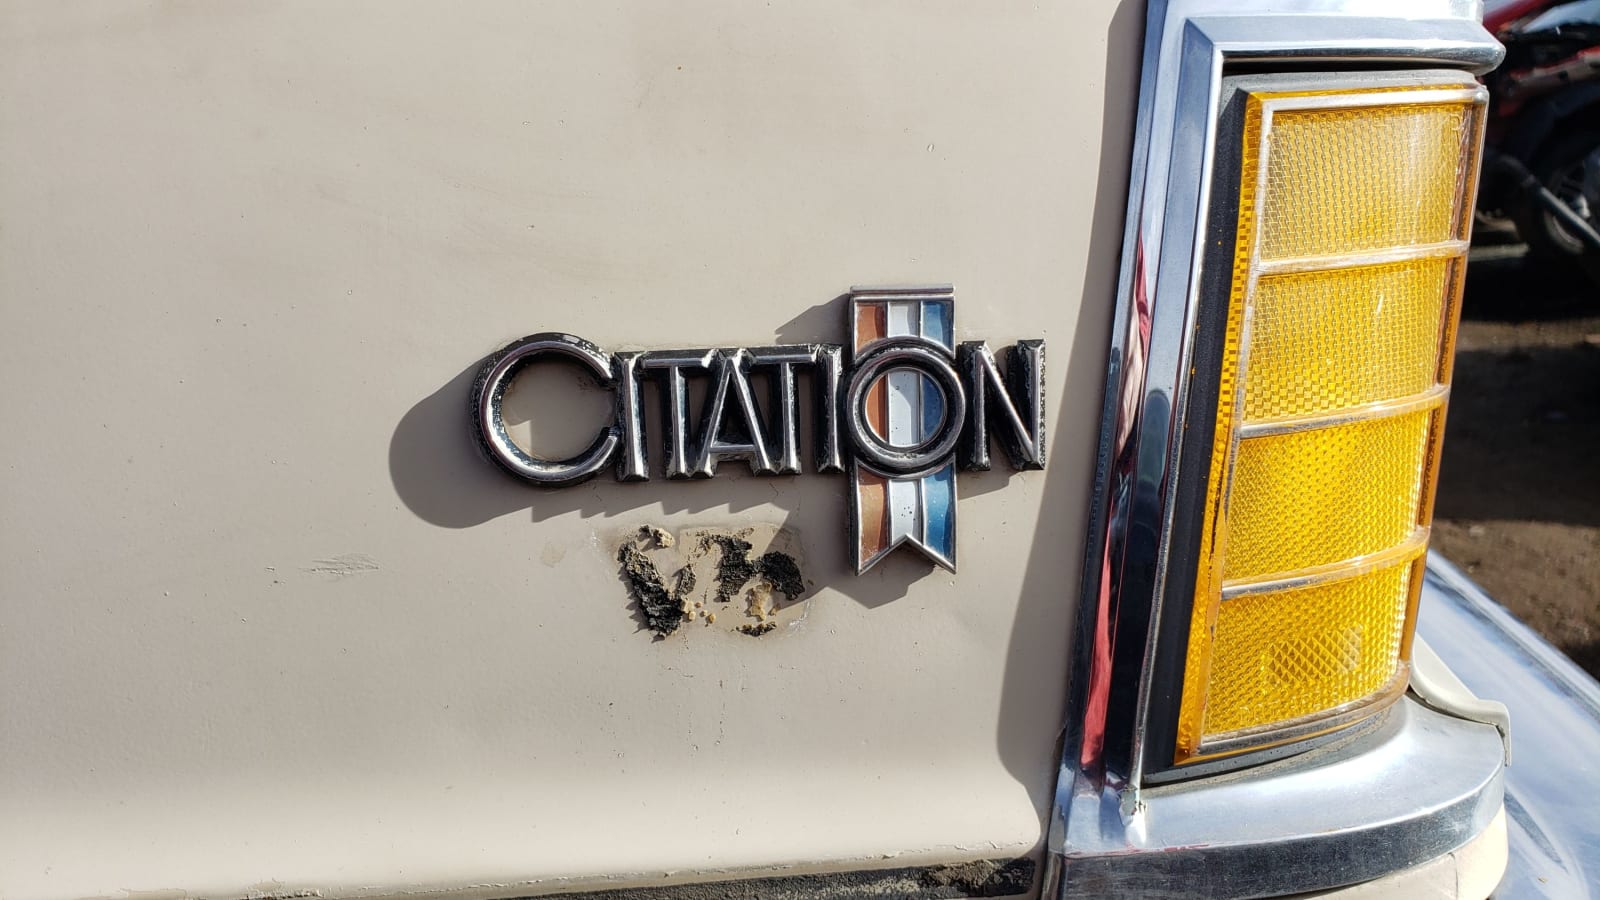 28 1981 Chevrolet Citation in Colorado Junkyard Photo by Murilee Martin1 – TodayHeadline